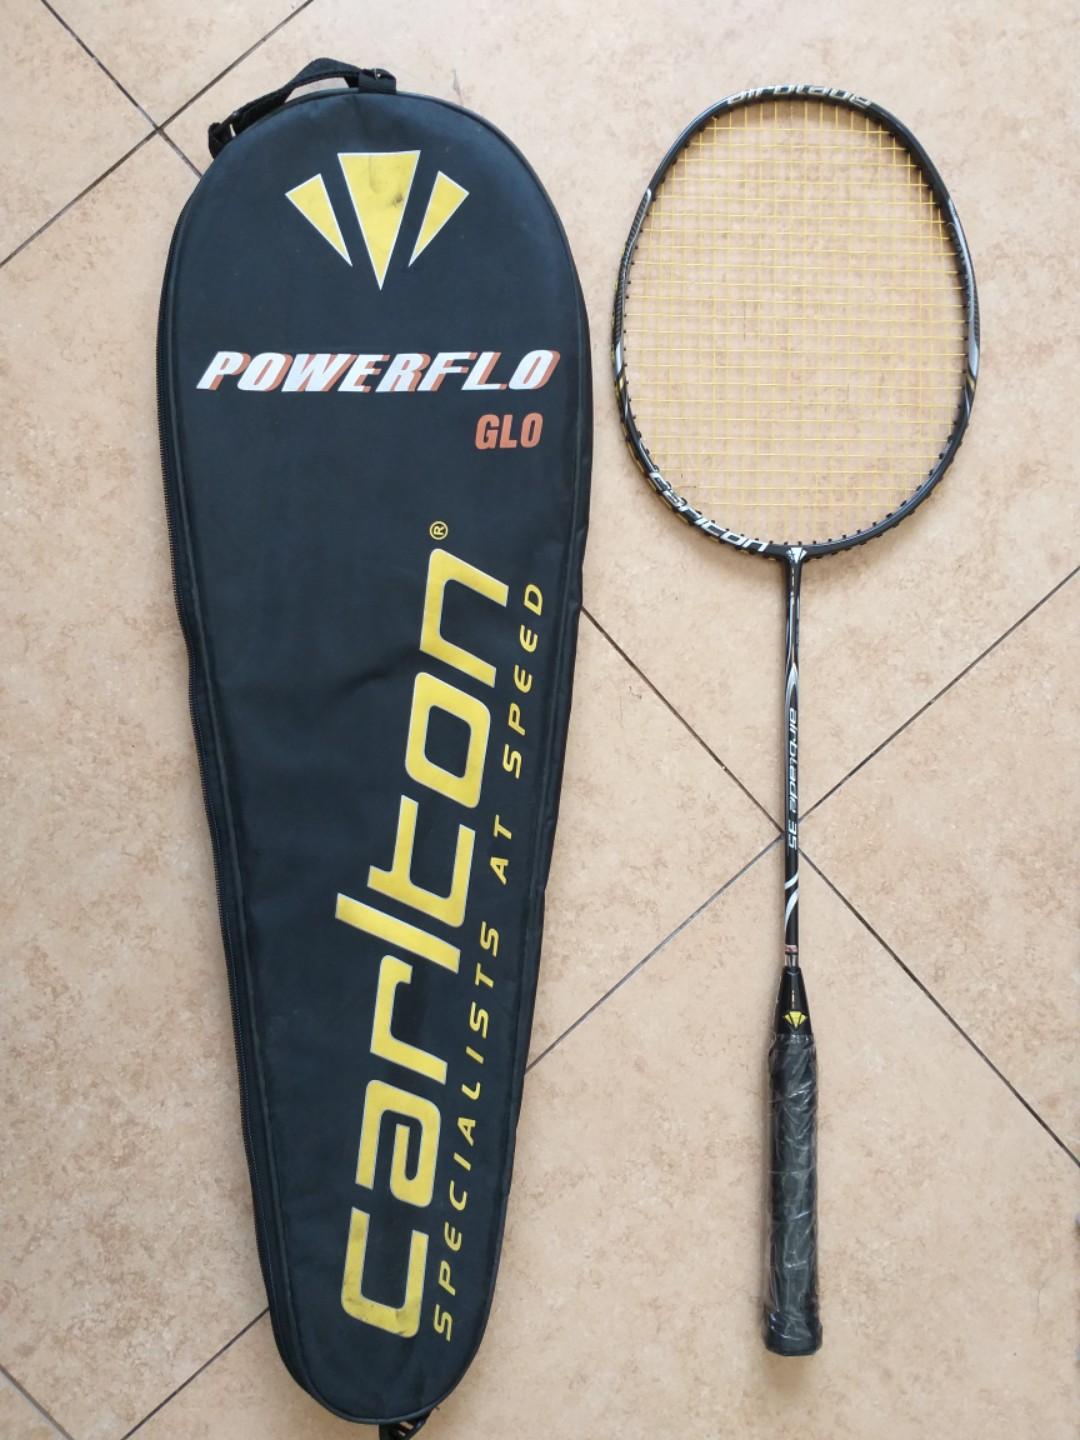 Carlton  Aero Blast Badminton Racket  NEW NO COVER 